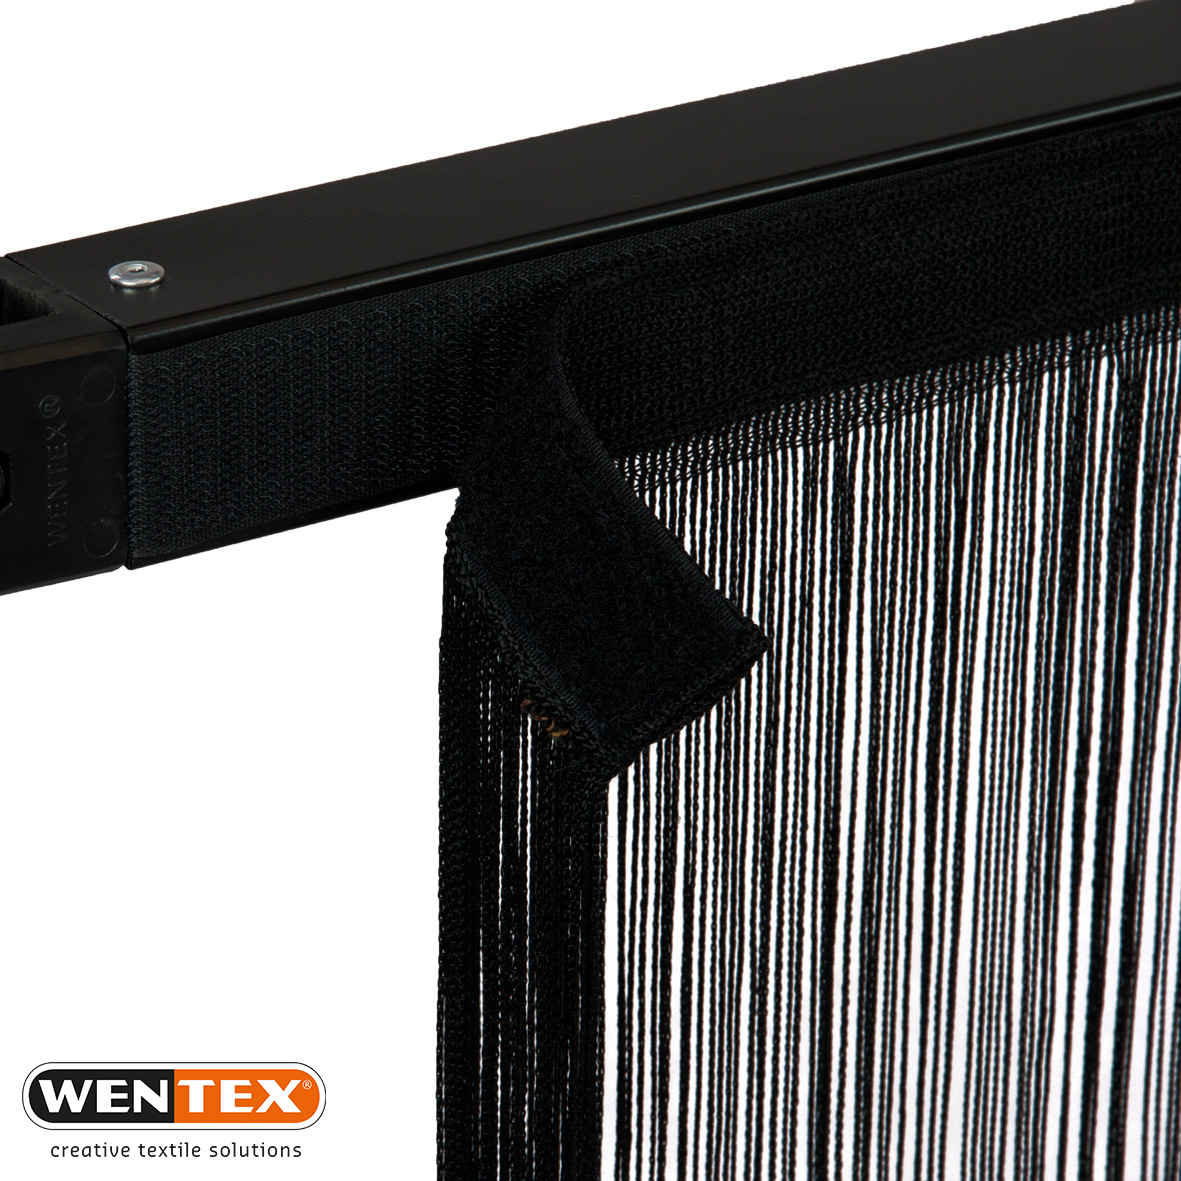 werk bestuurder Bijdrage Wentex creative textile solutions - Products